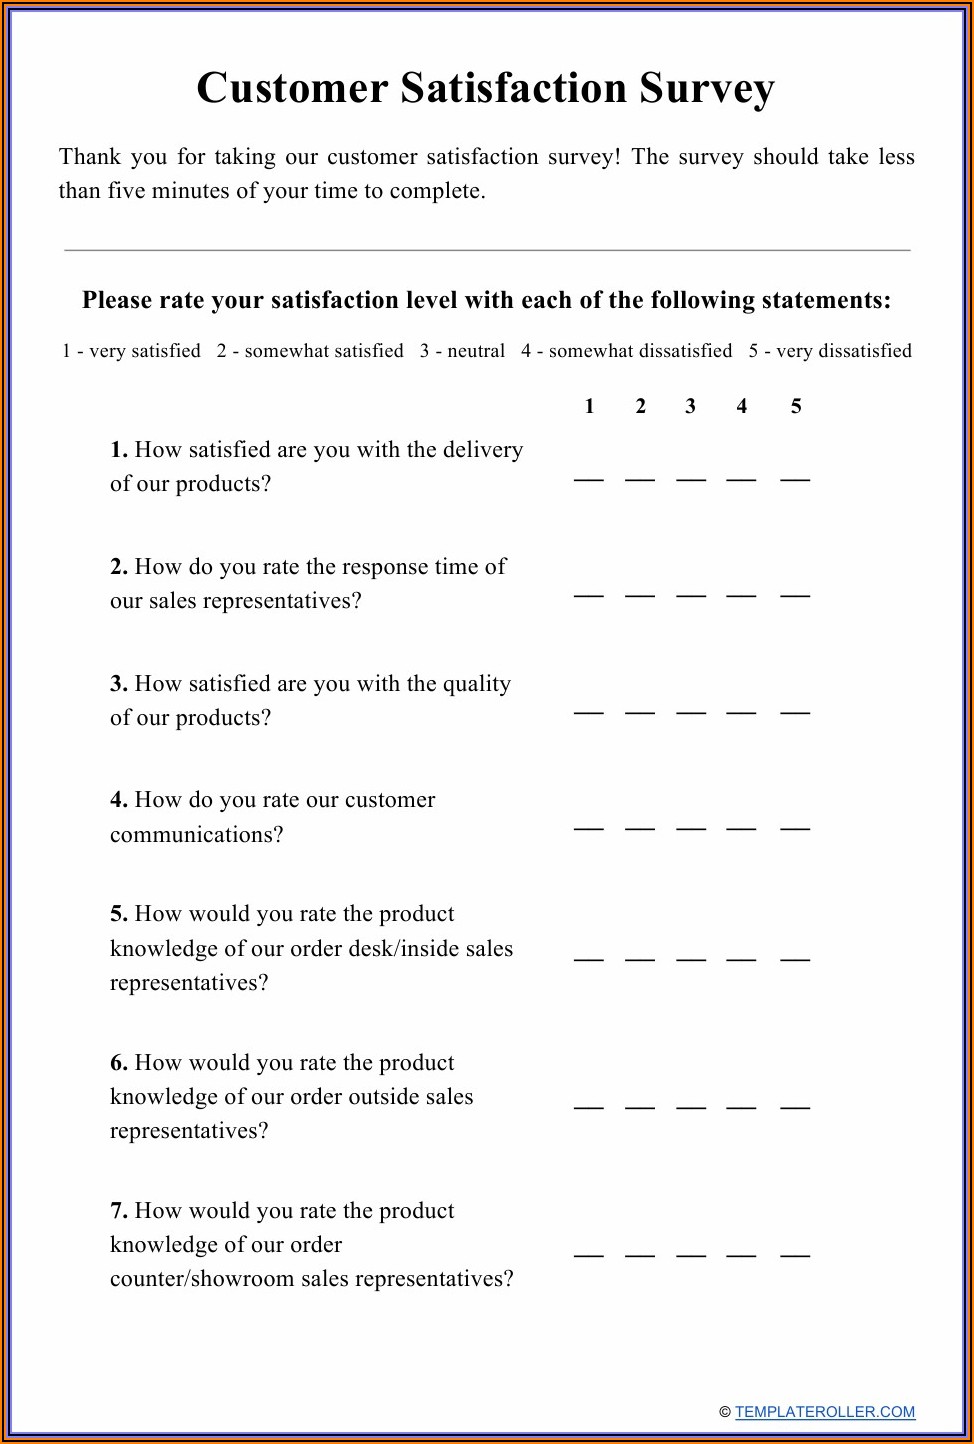 Customer Satisfaction Survey Form Excel